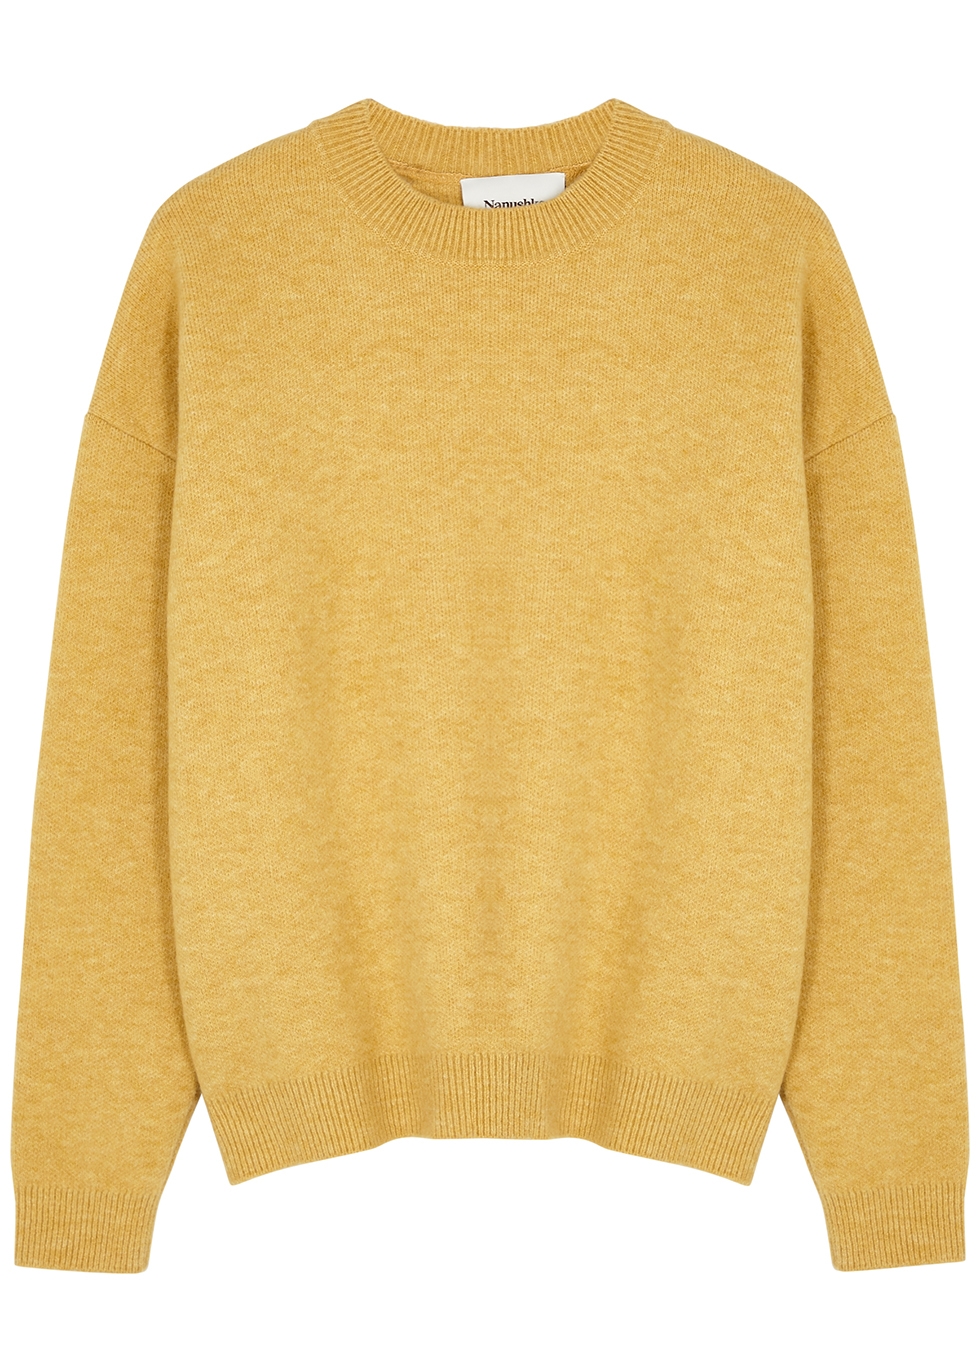 Junia mustard wool-blend jumper